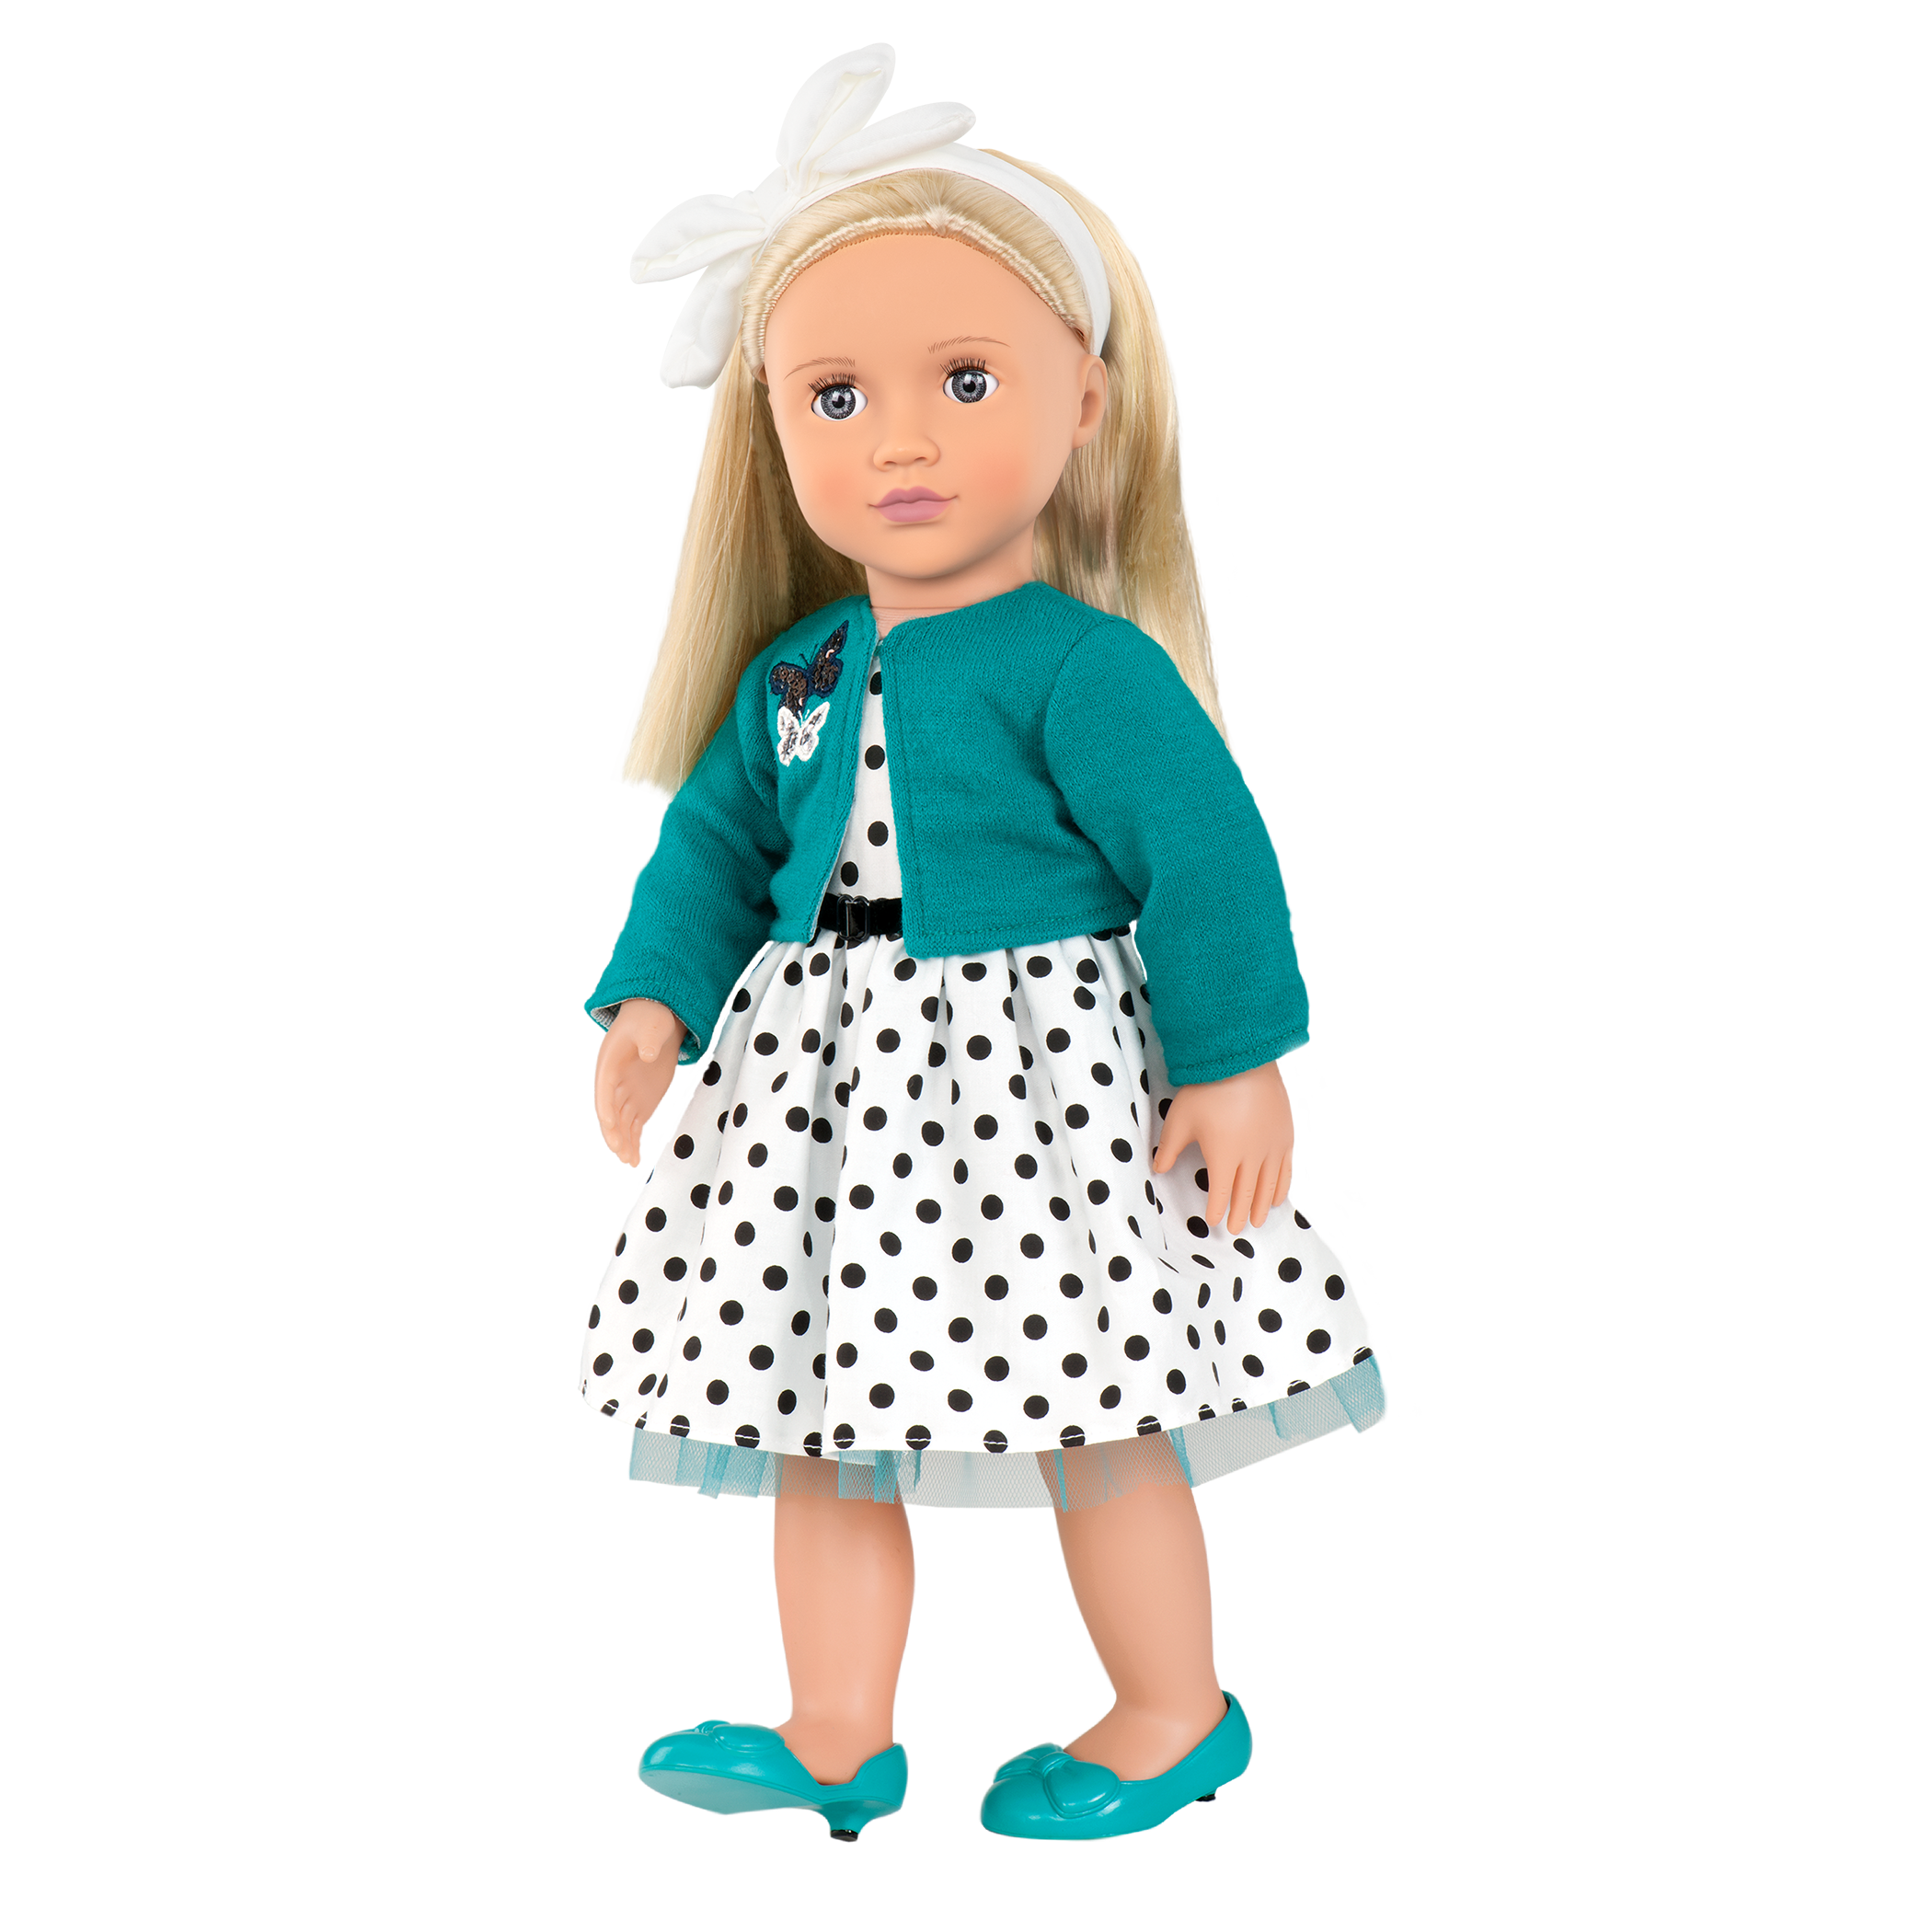 Ruby Retro 18-inch Doll with Polka Dot Dress 